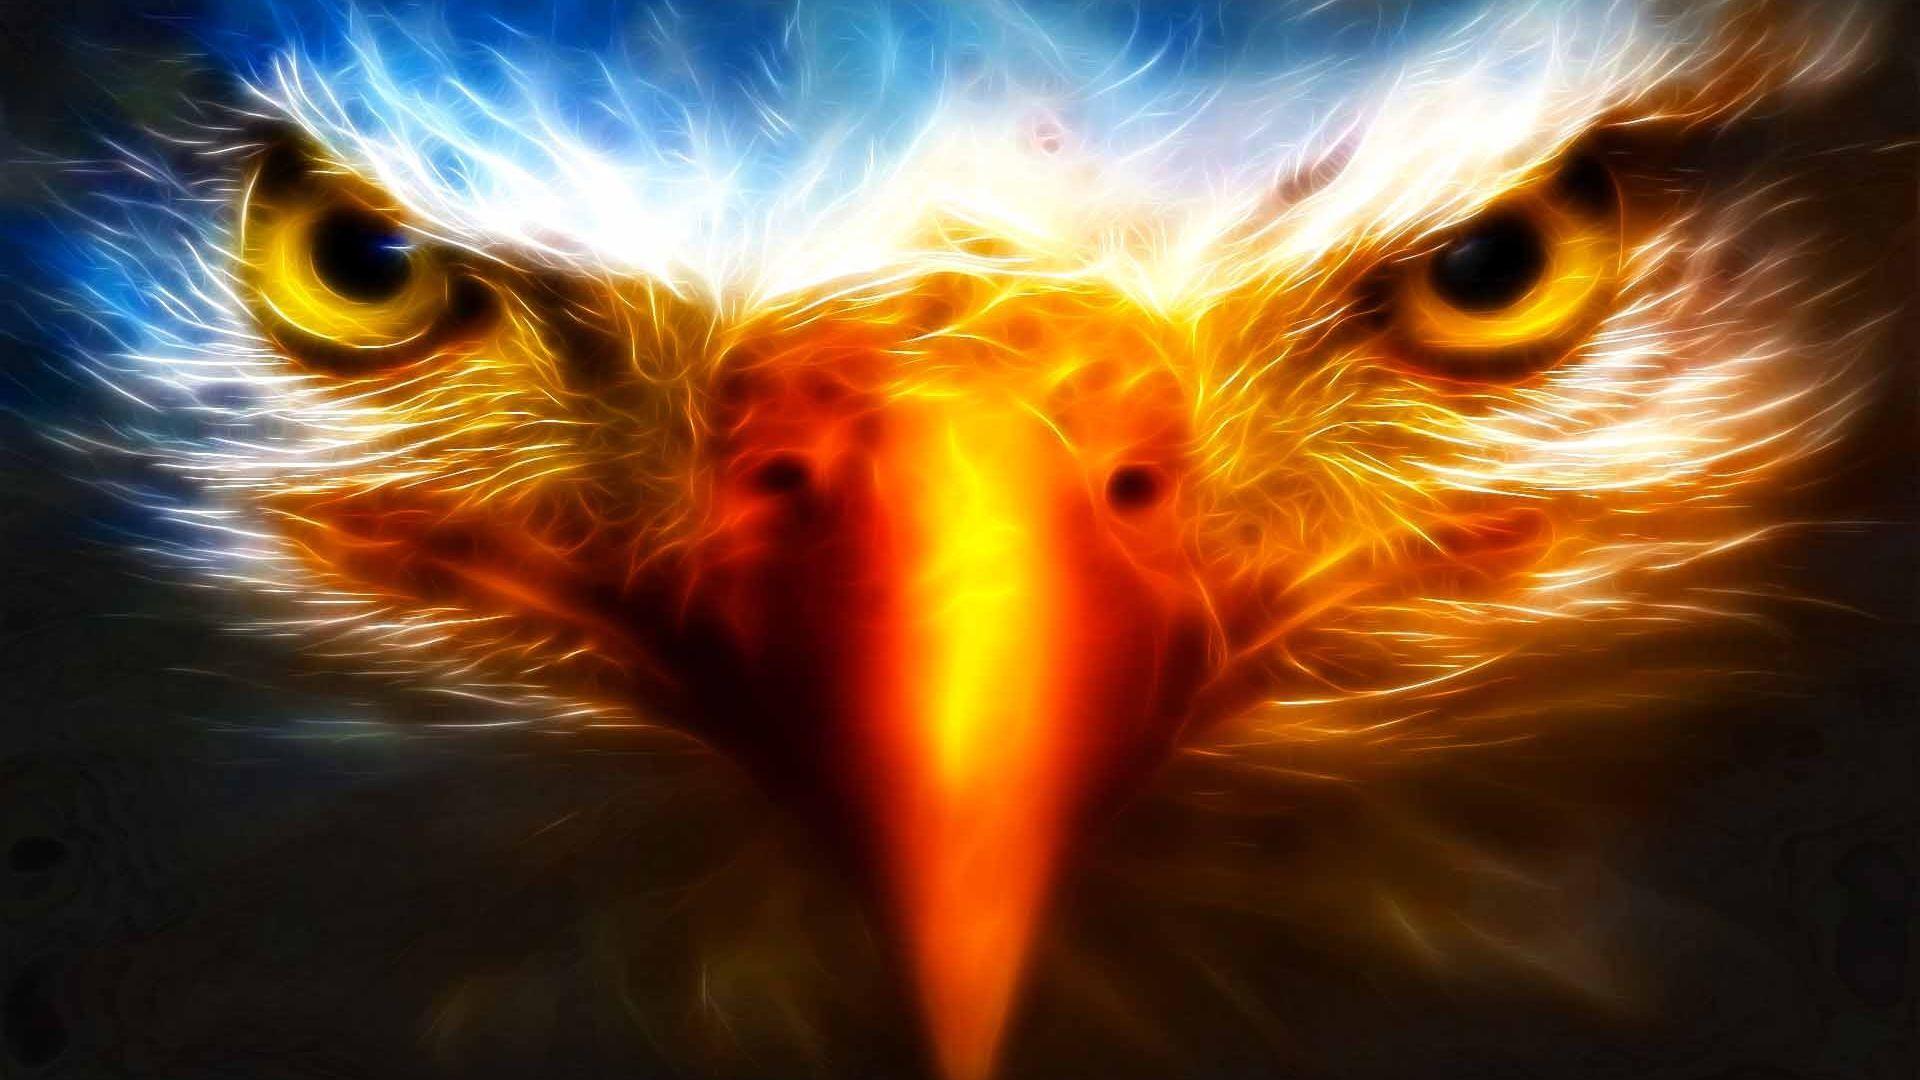 3D Wallpaper Eagle Eyes Widescreen. Wallpaper. Eagle